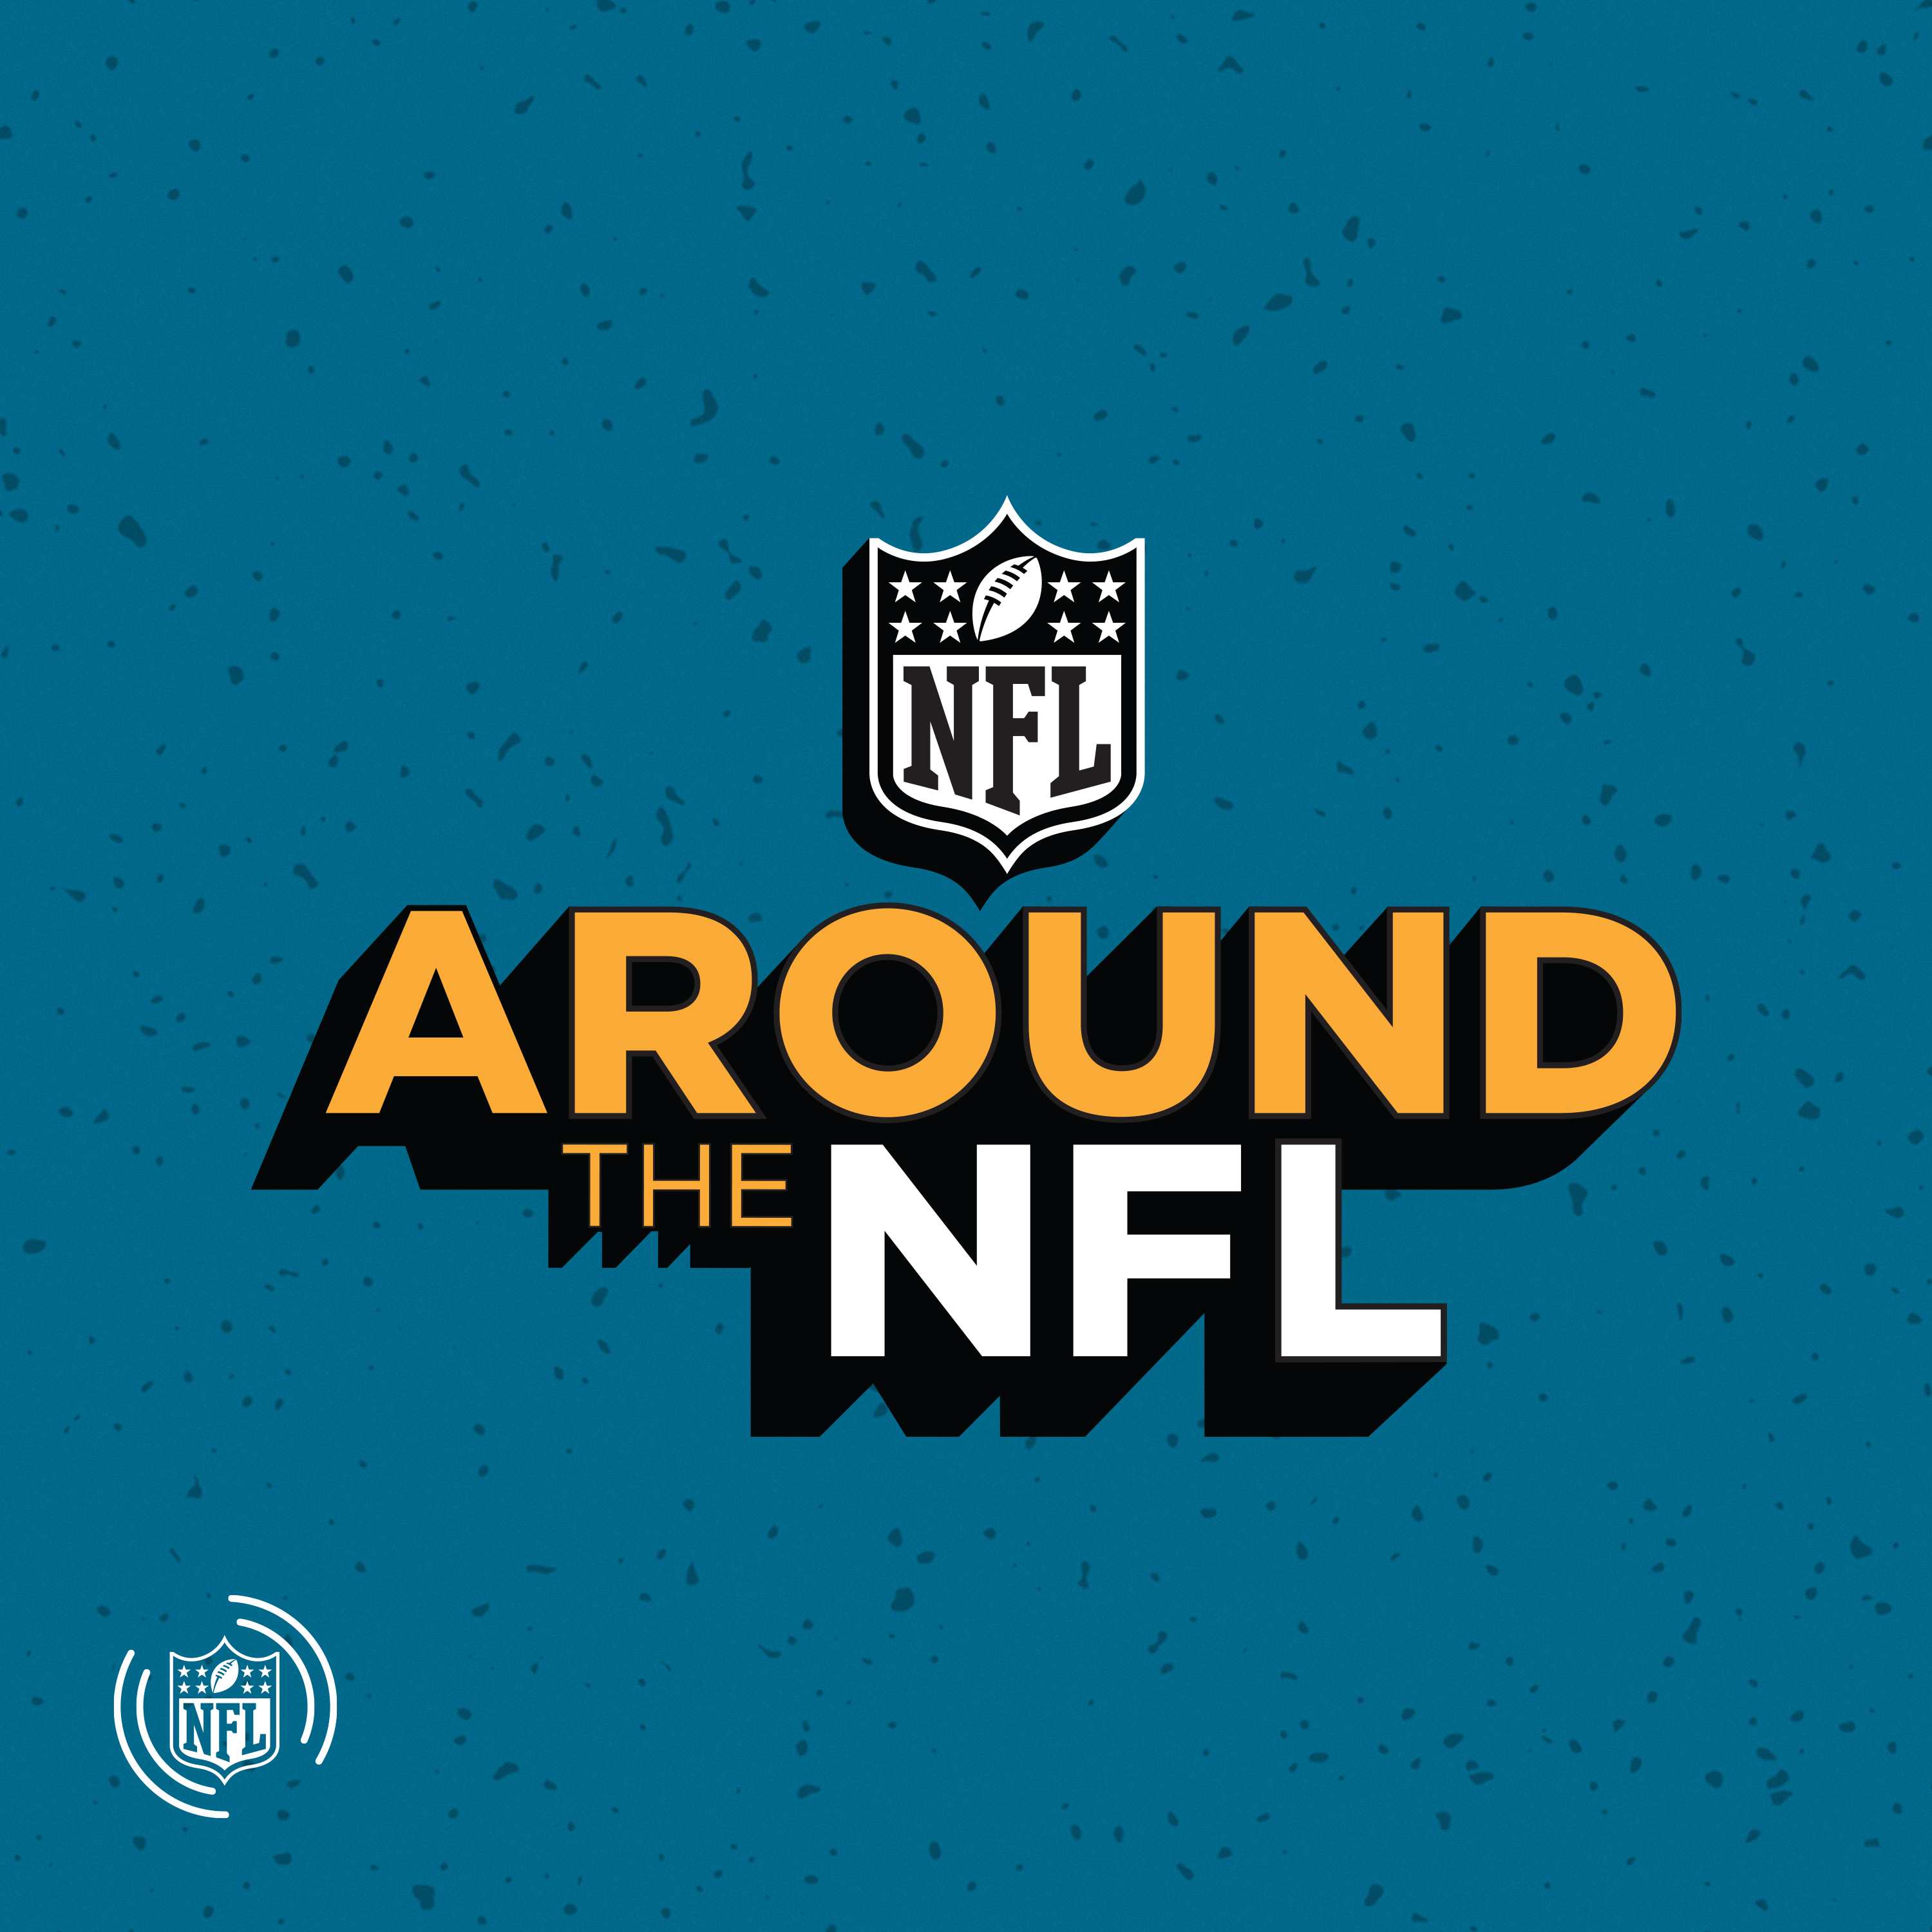 NFL ATL: Week 6 recap